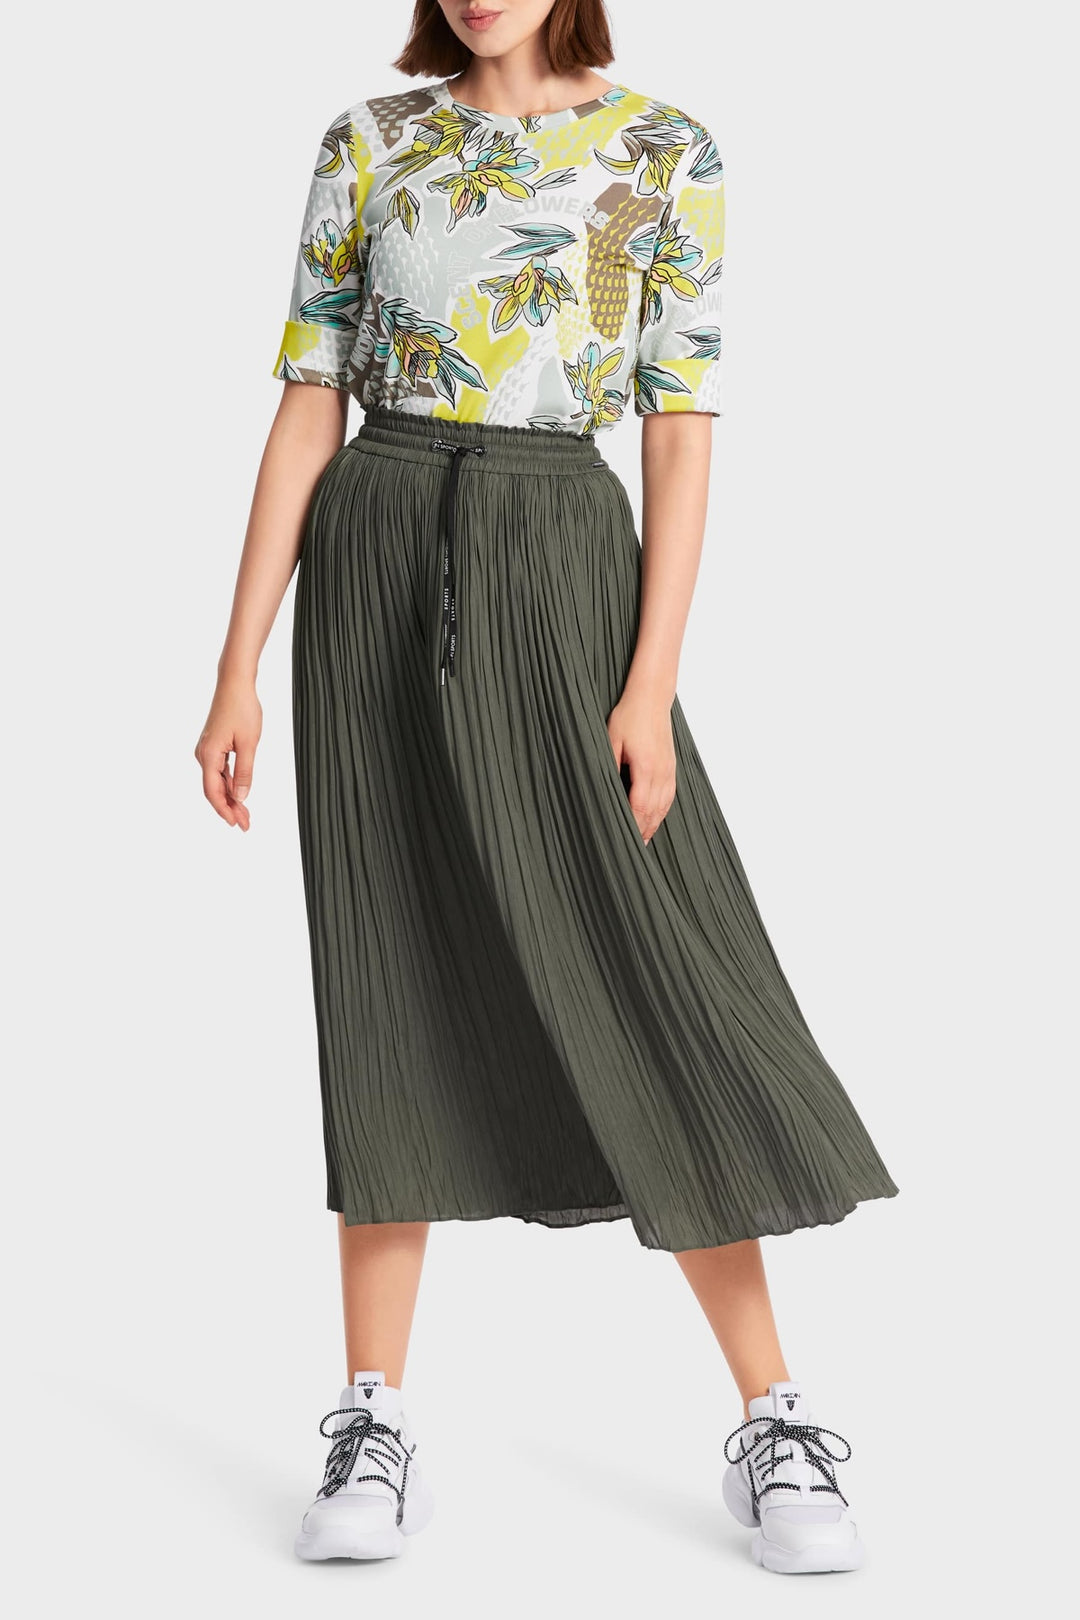 Pleated mid-length skirt